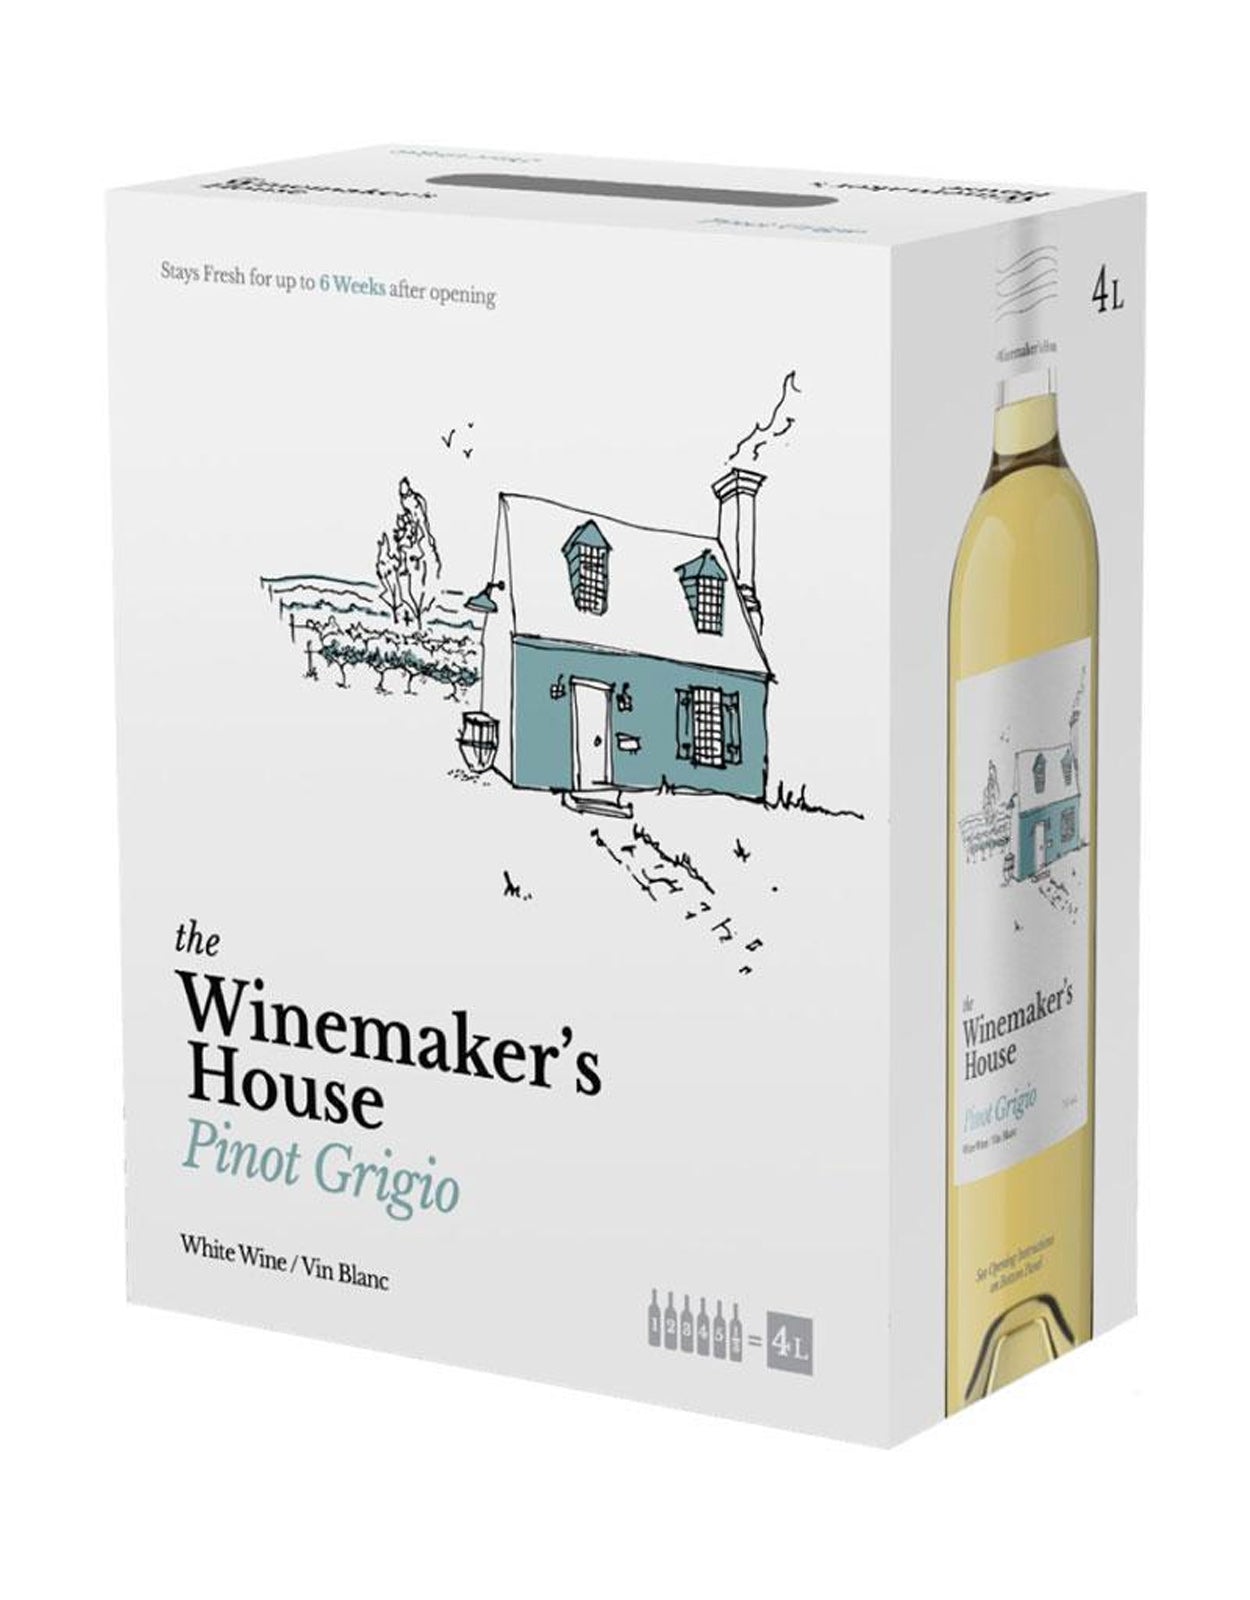 Winemaker's House Pinot Grigio (NV) - 4 Litre Box